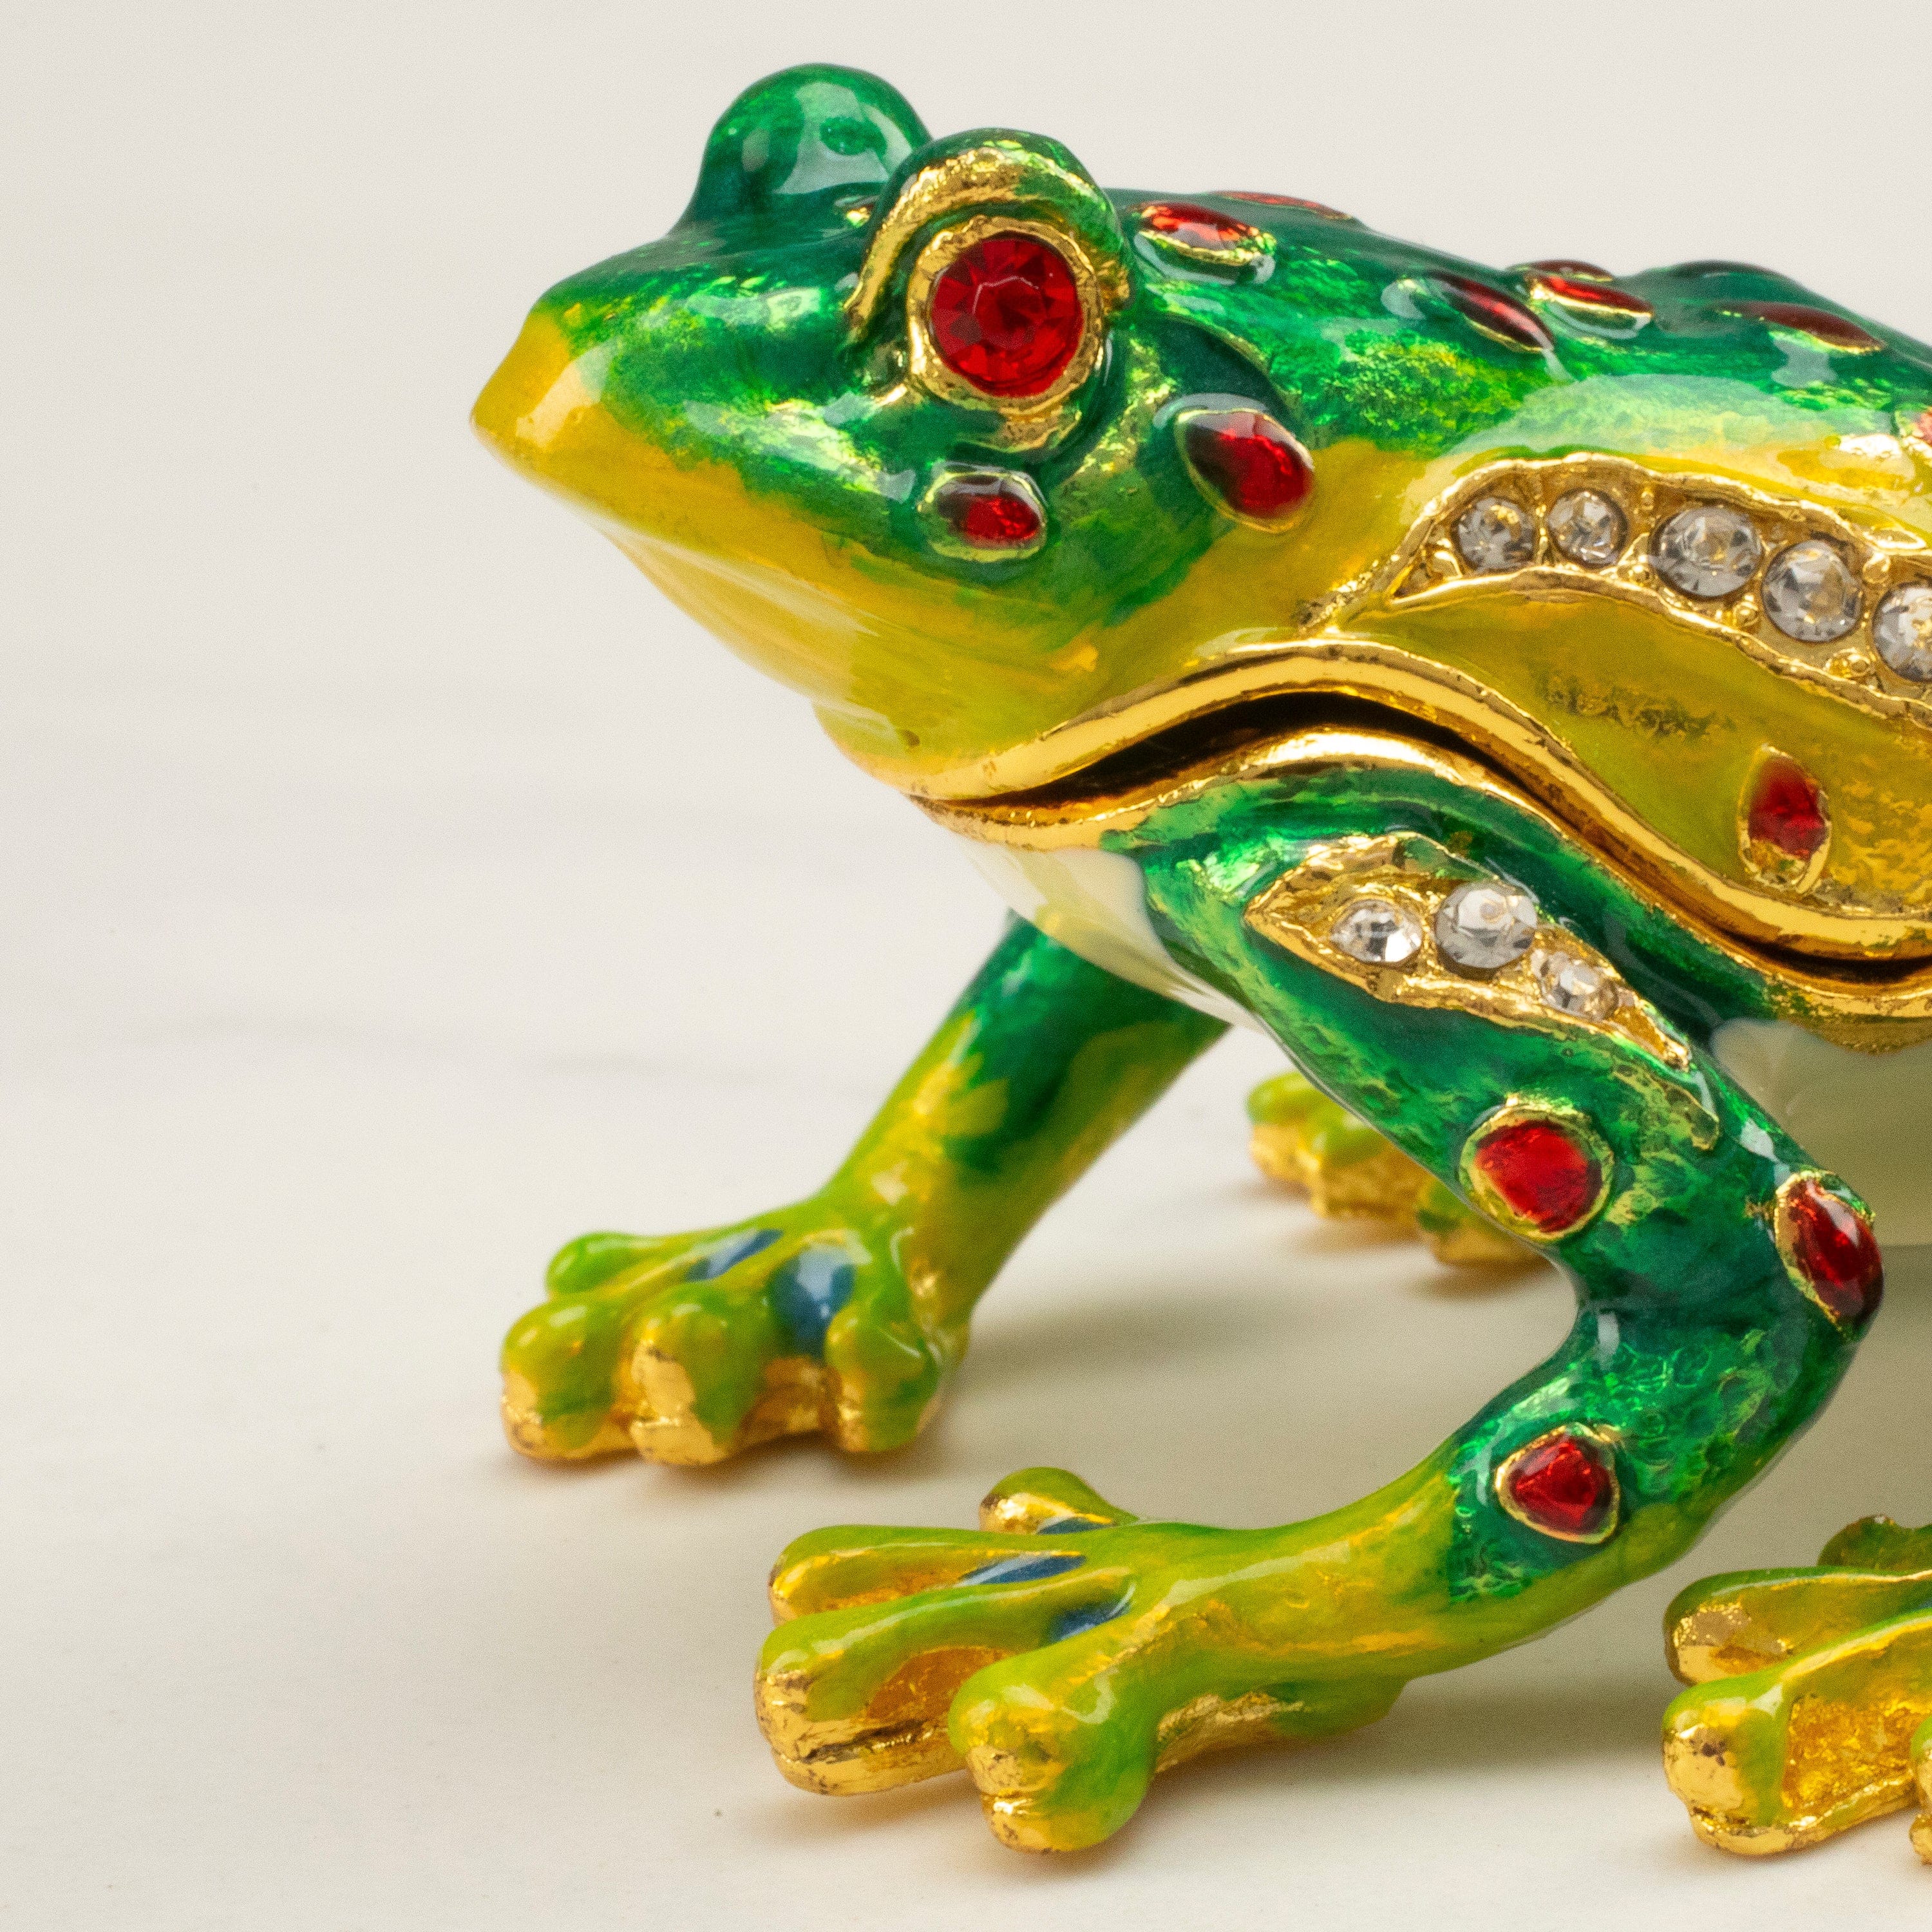 Kalifano Vanity Figurine Frog Figurine Keepsake Box made with Crystals SVA-123